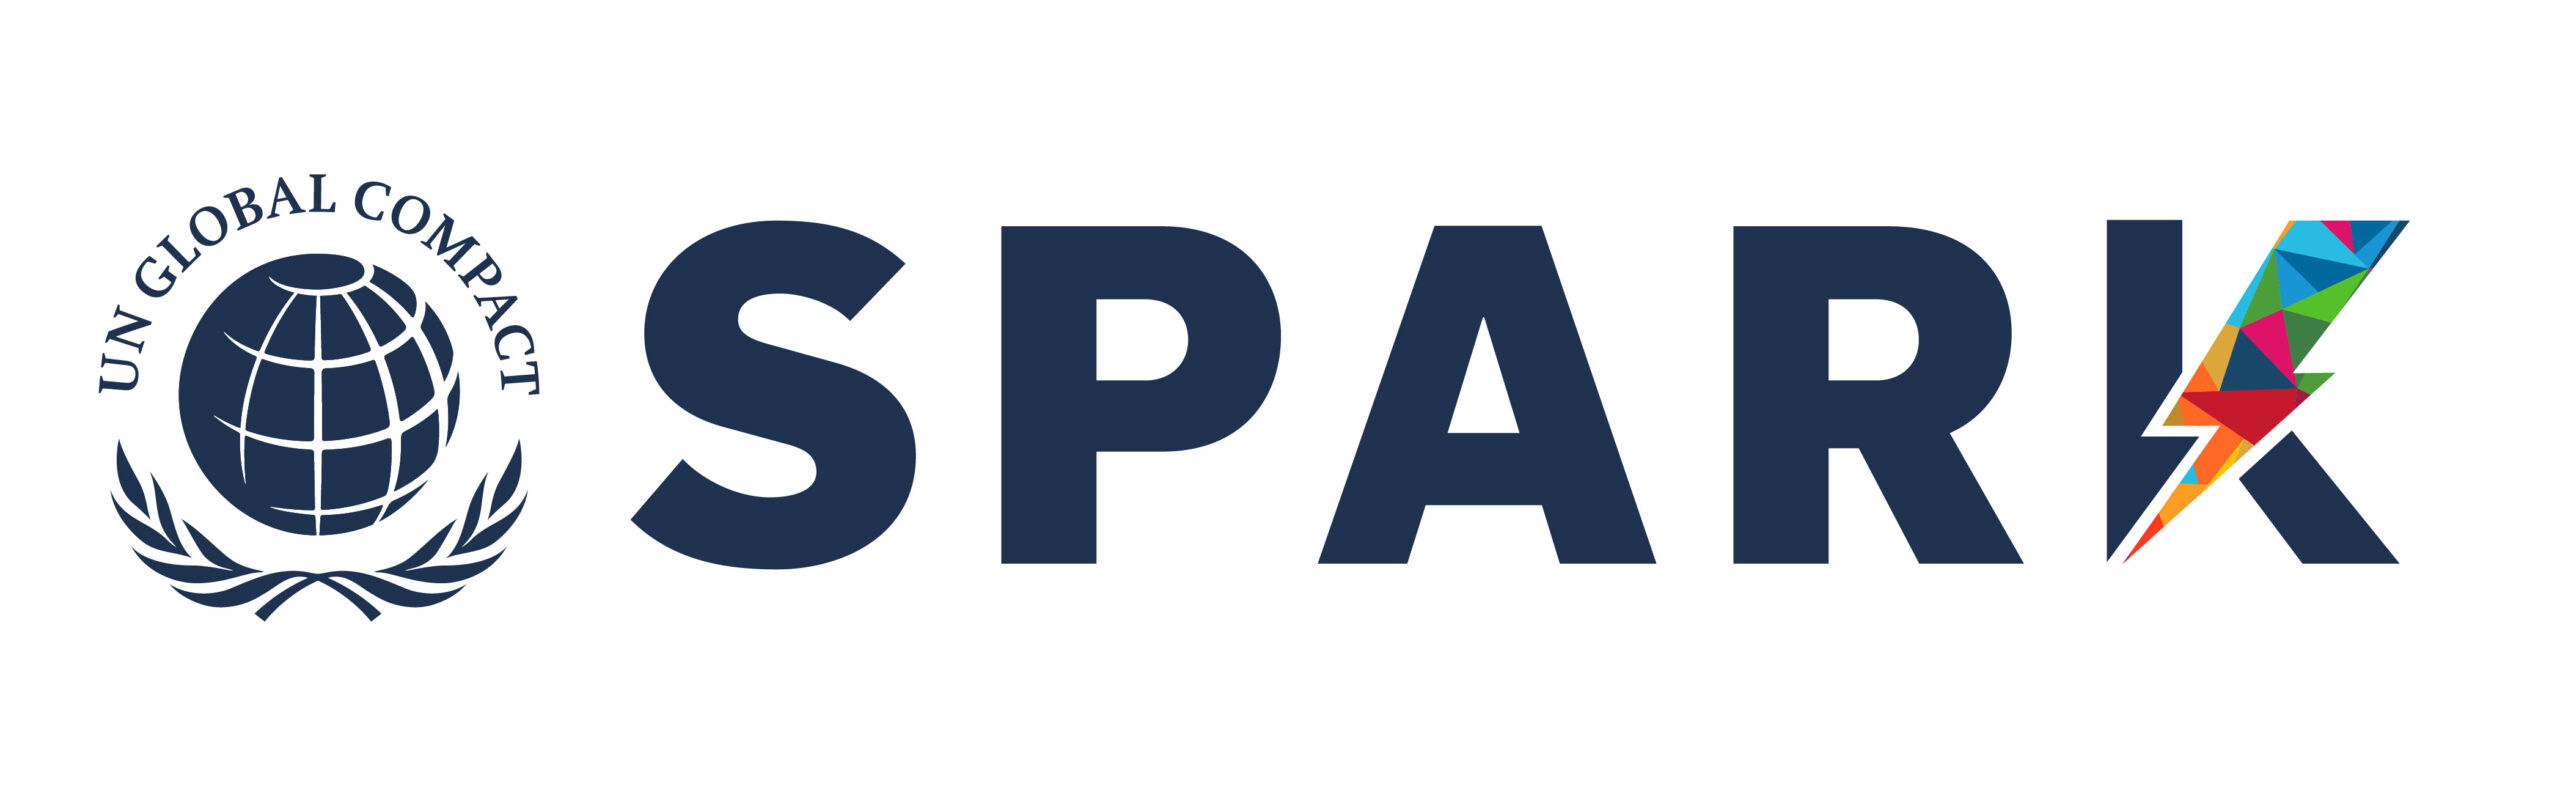 SME_SPARK_Logo (1)